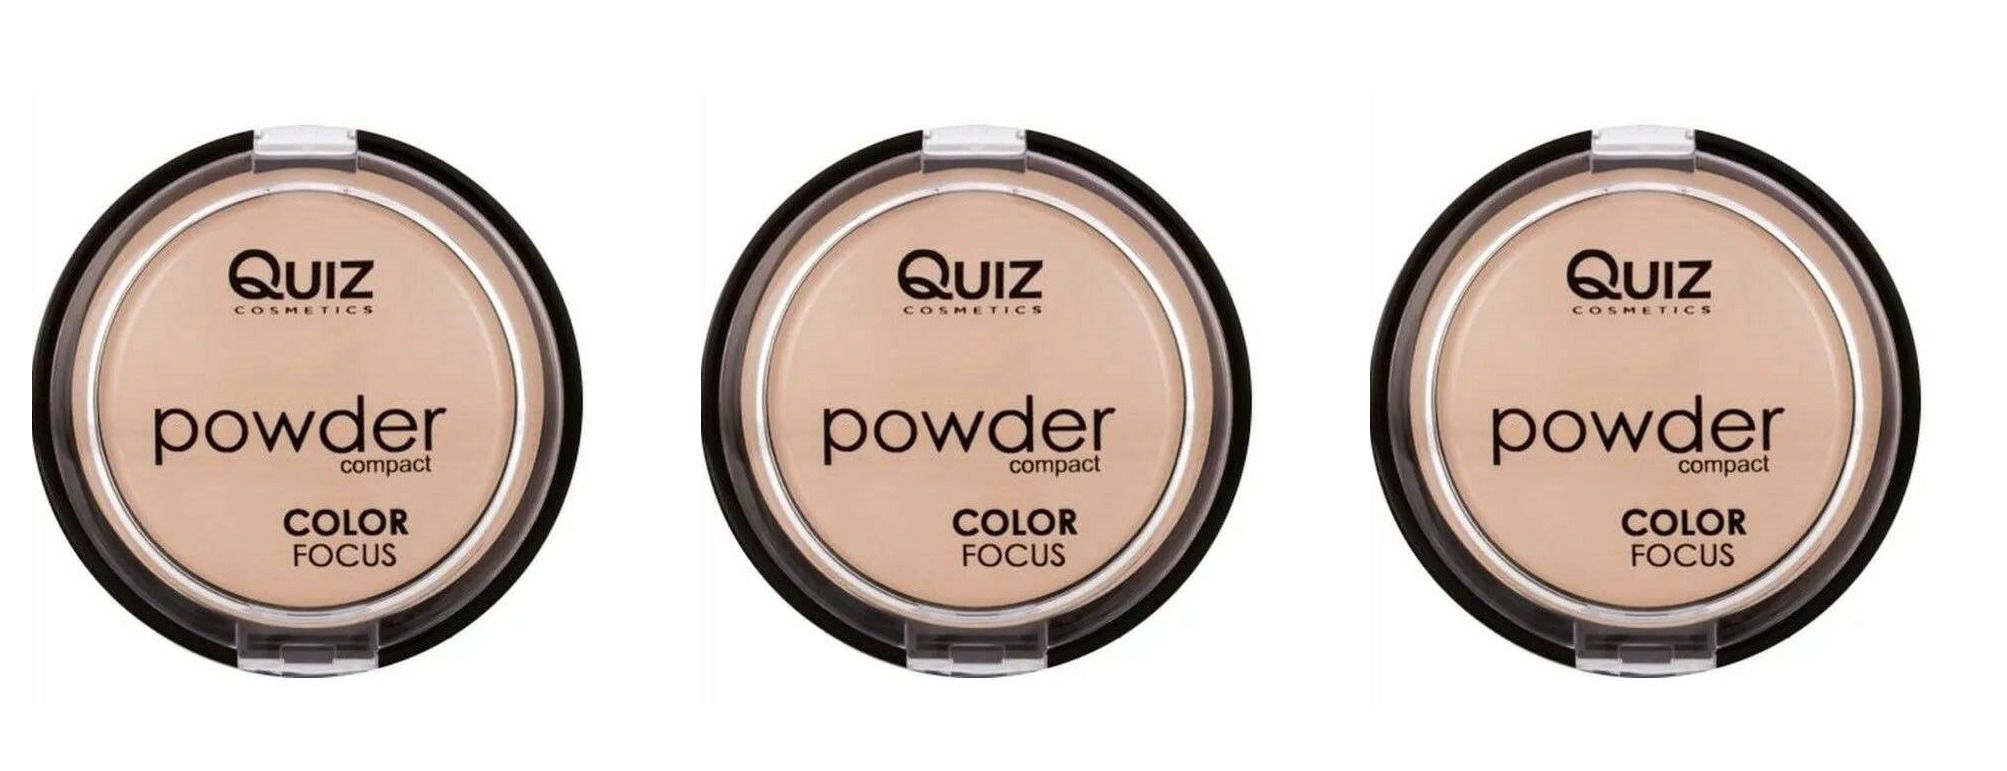 Пудра компактная Quiz cosmetics, Powder Focus, Color 60, 3 шт пудра для лица wet n wild bare focus clarifying finishing powder 1114478e translucent 6 г